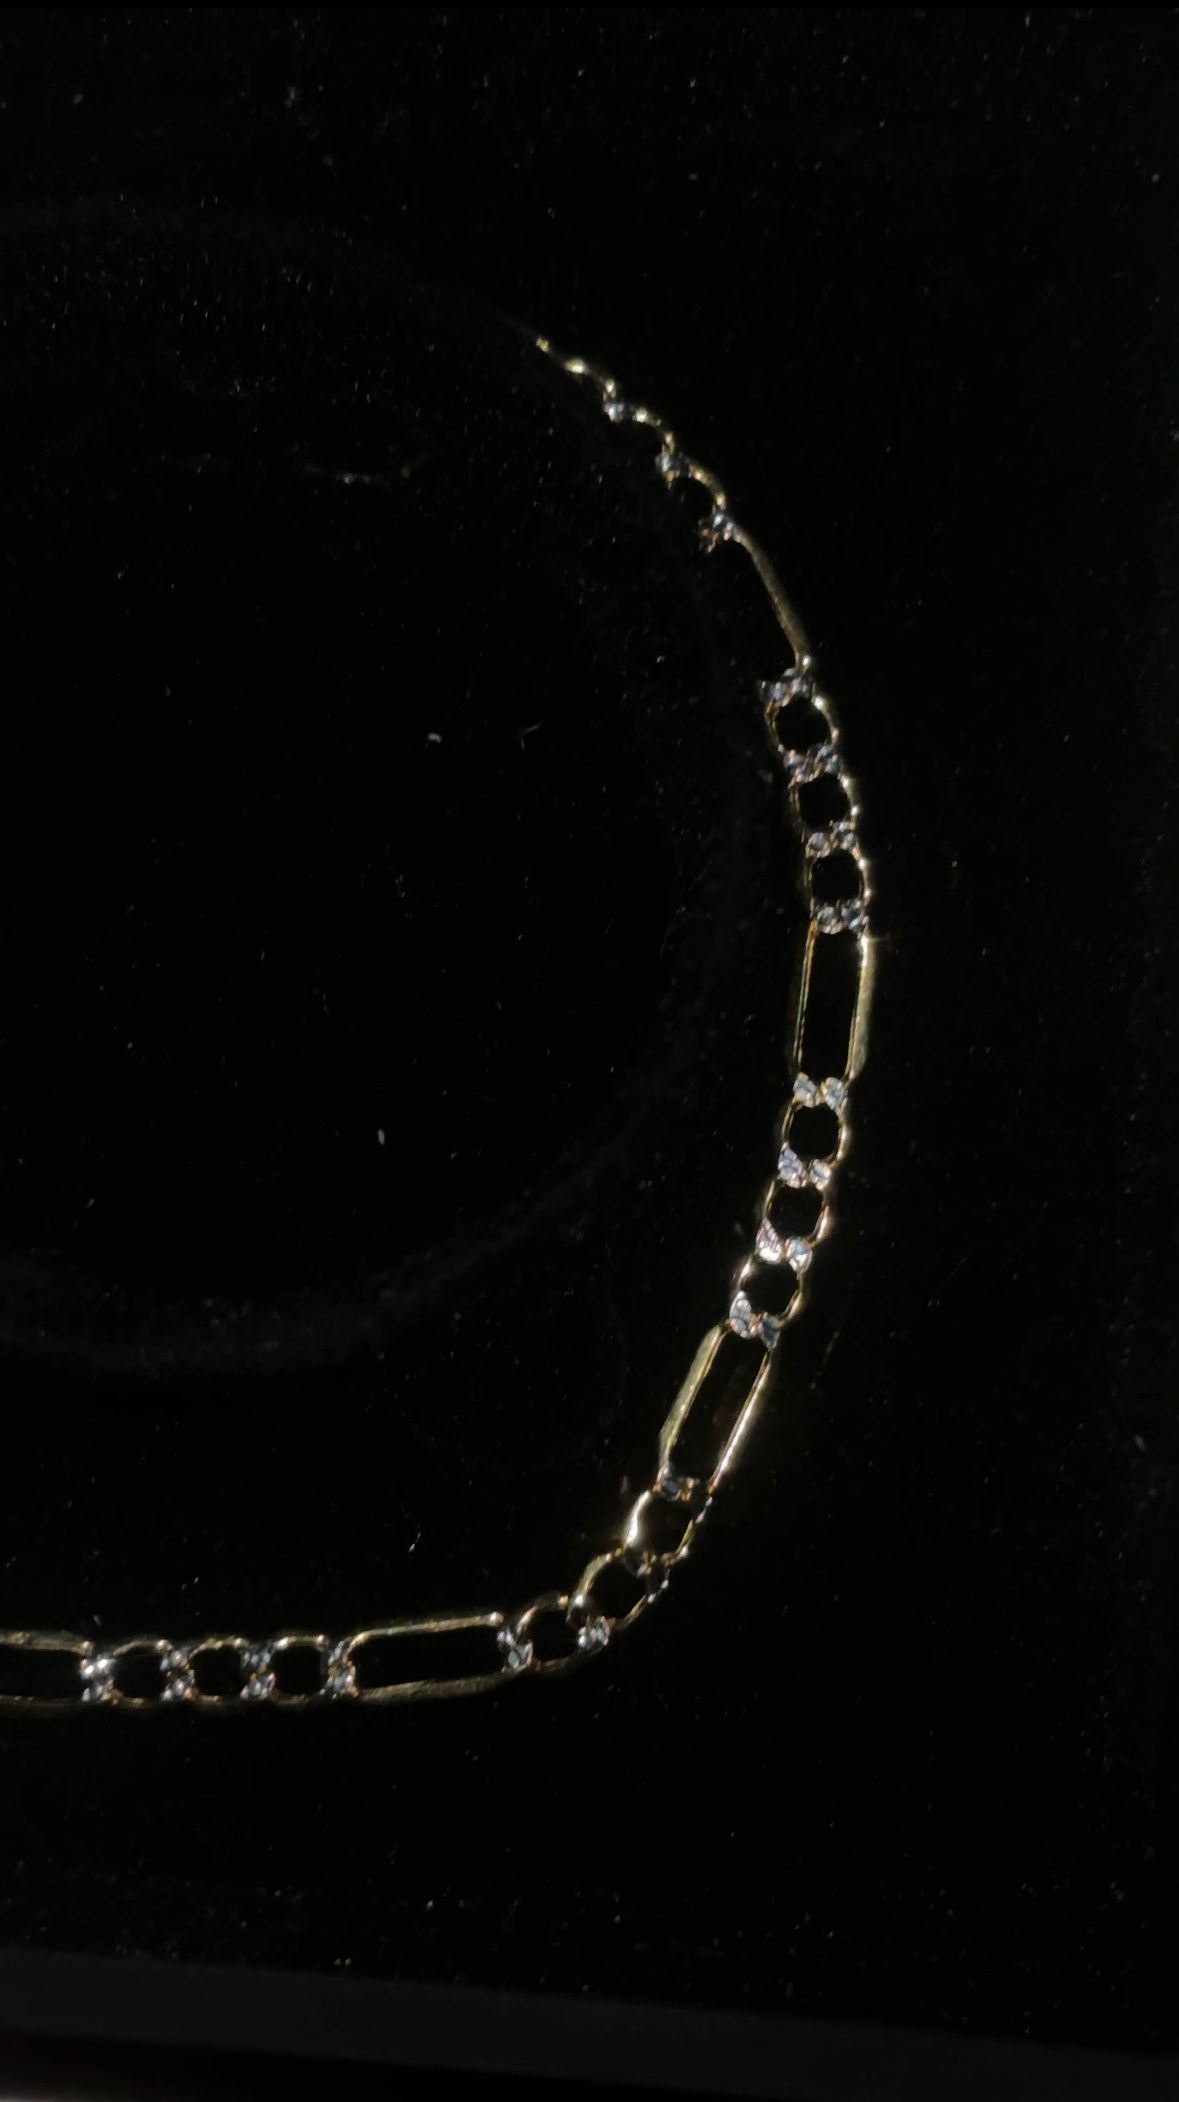 Figaro 14k Diamond Cut Bracelet 